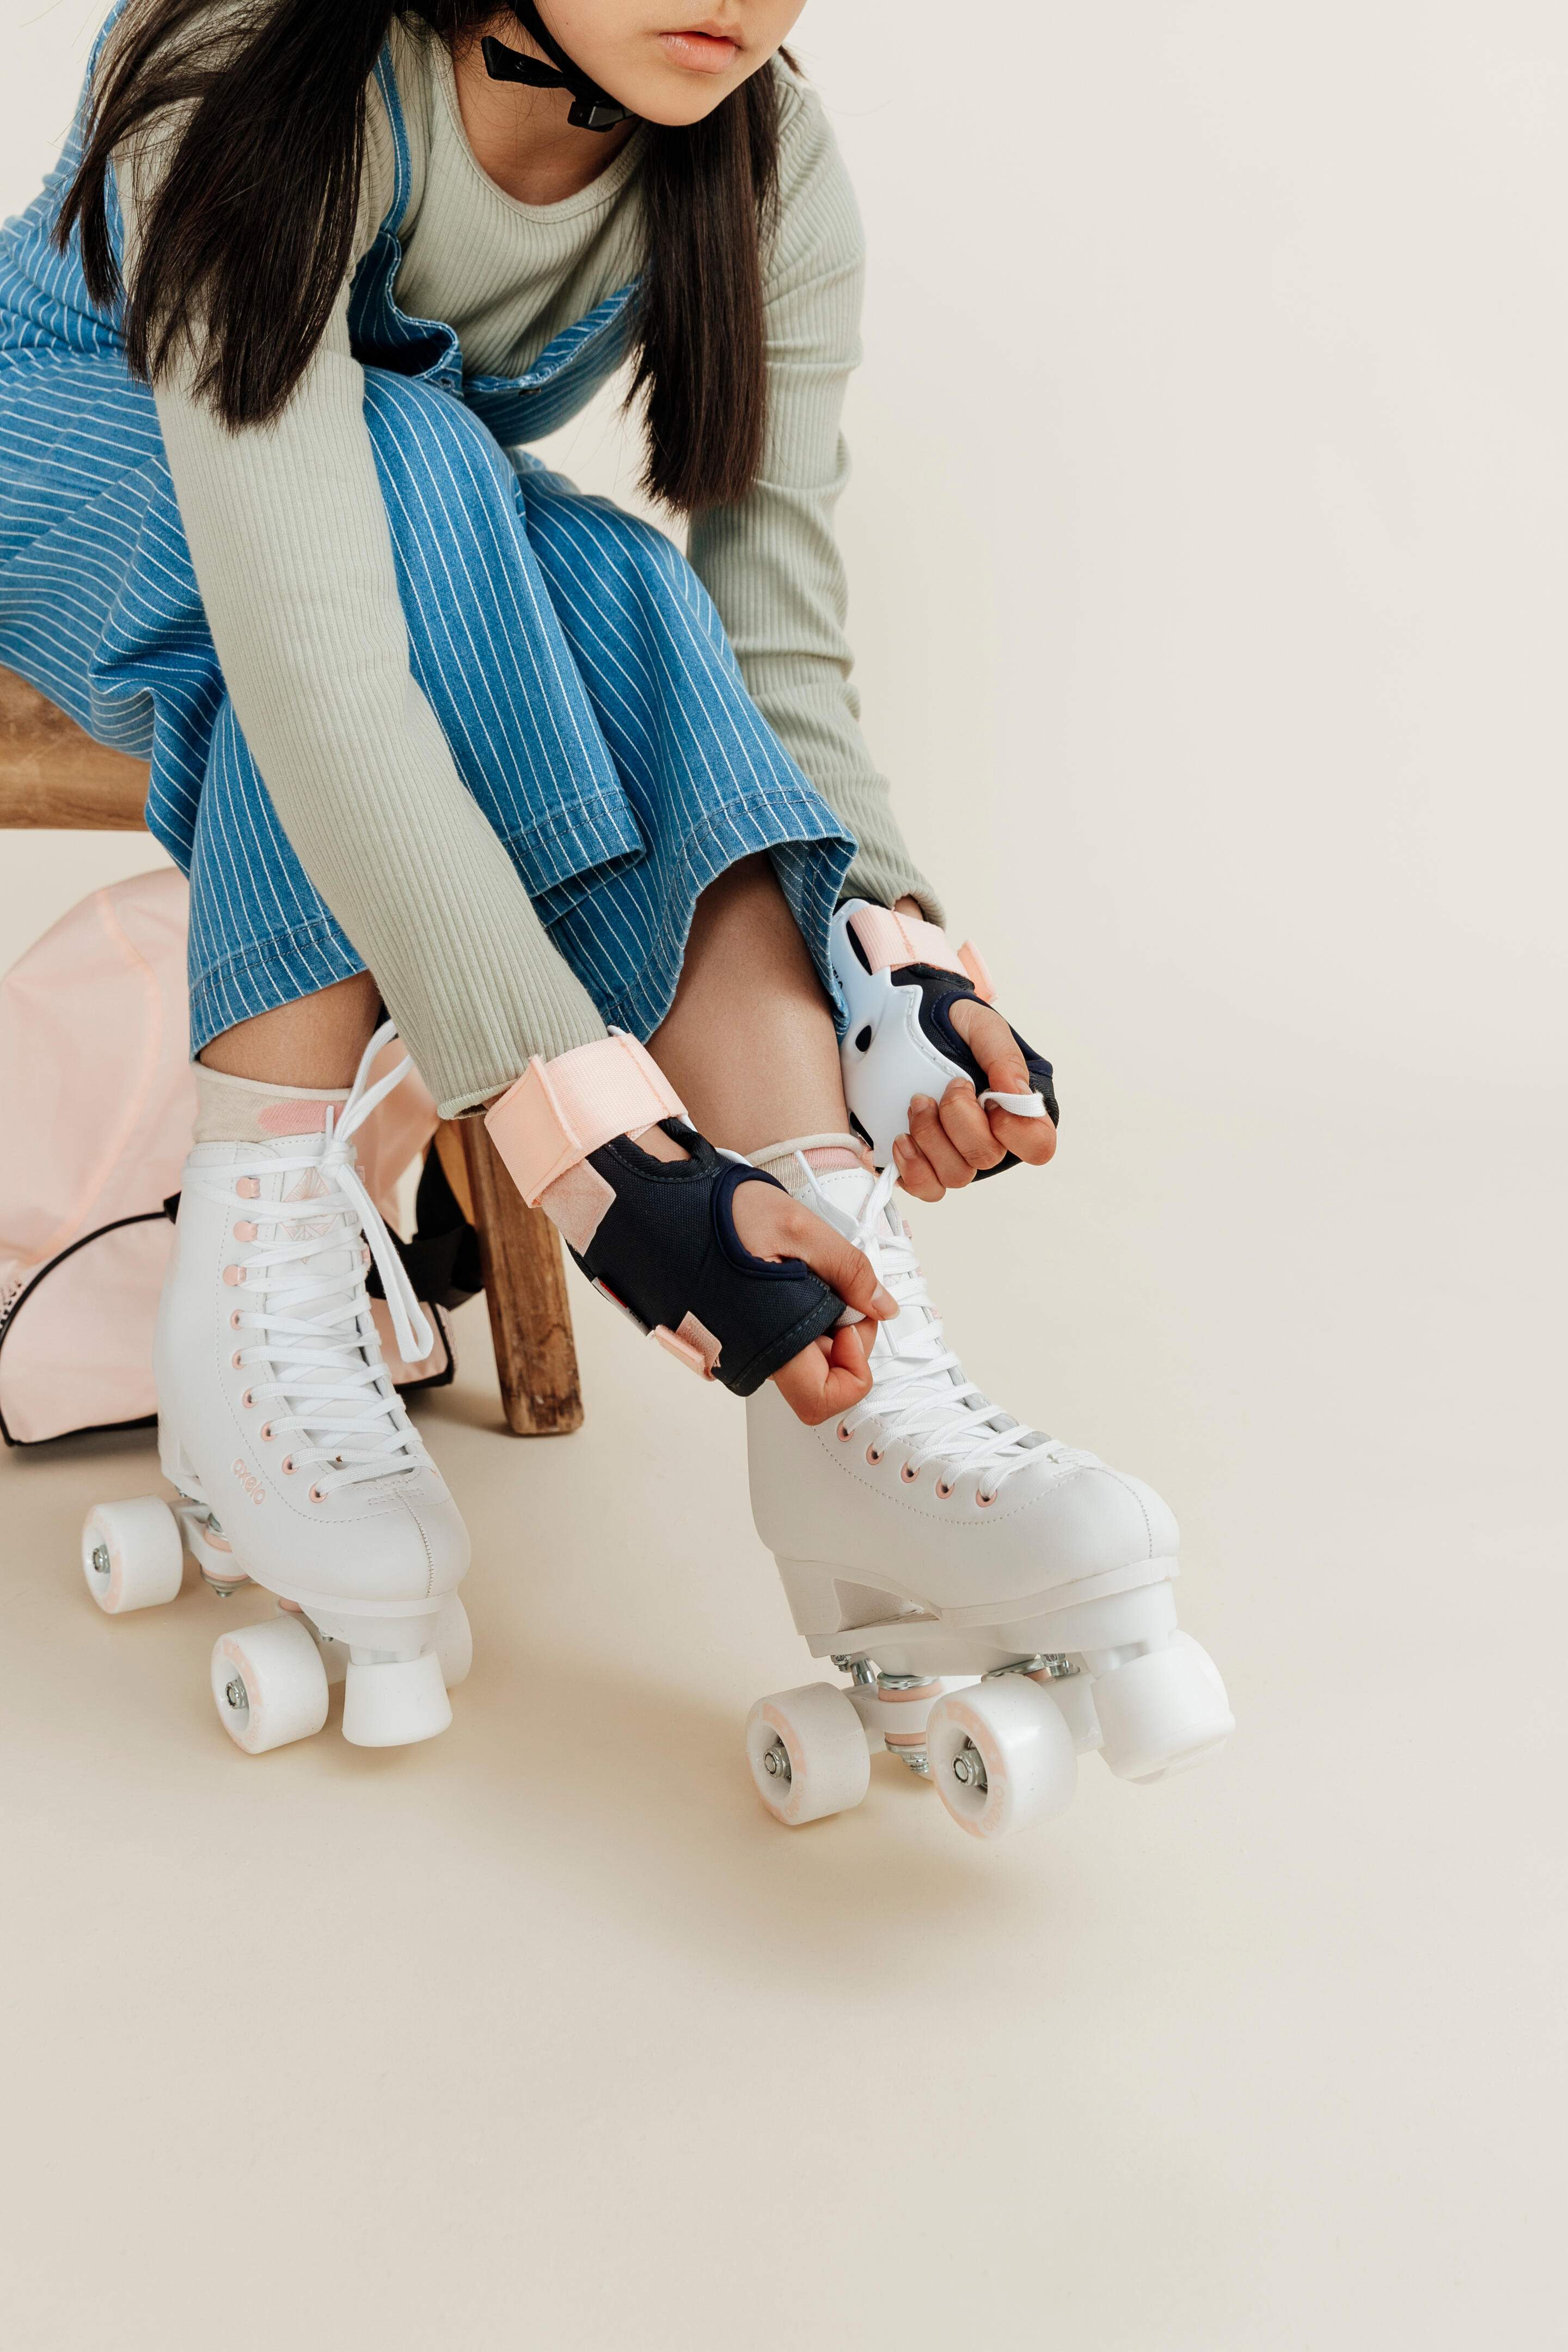 Kids' and Adult Artistic Roller Skating Quad Skates 100 - White 12/57